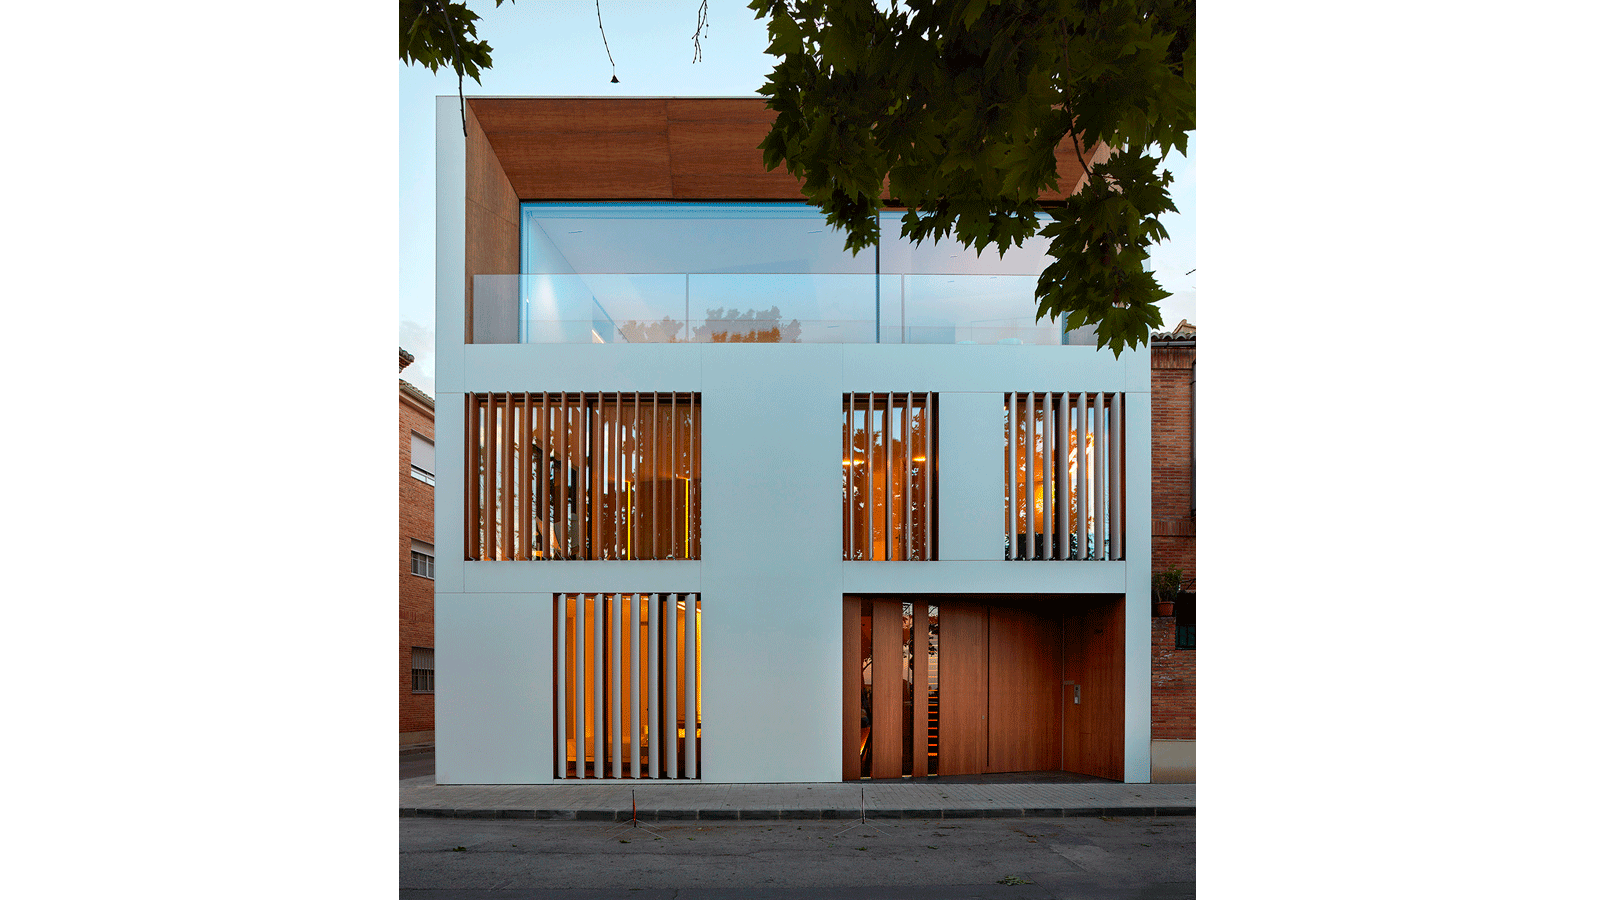 PORCELANOSA Grupo Projects: Minimal geometry in the ‘Casa en la huerta’ by Ramón Esteve Estudio